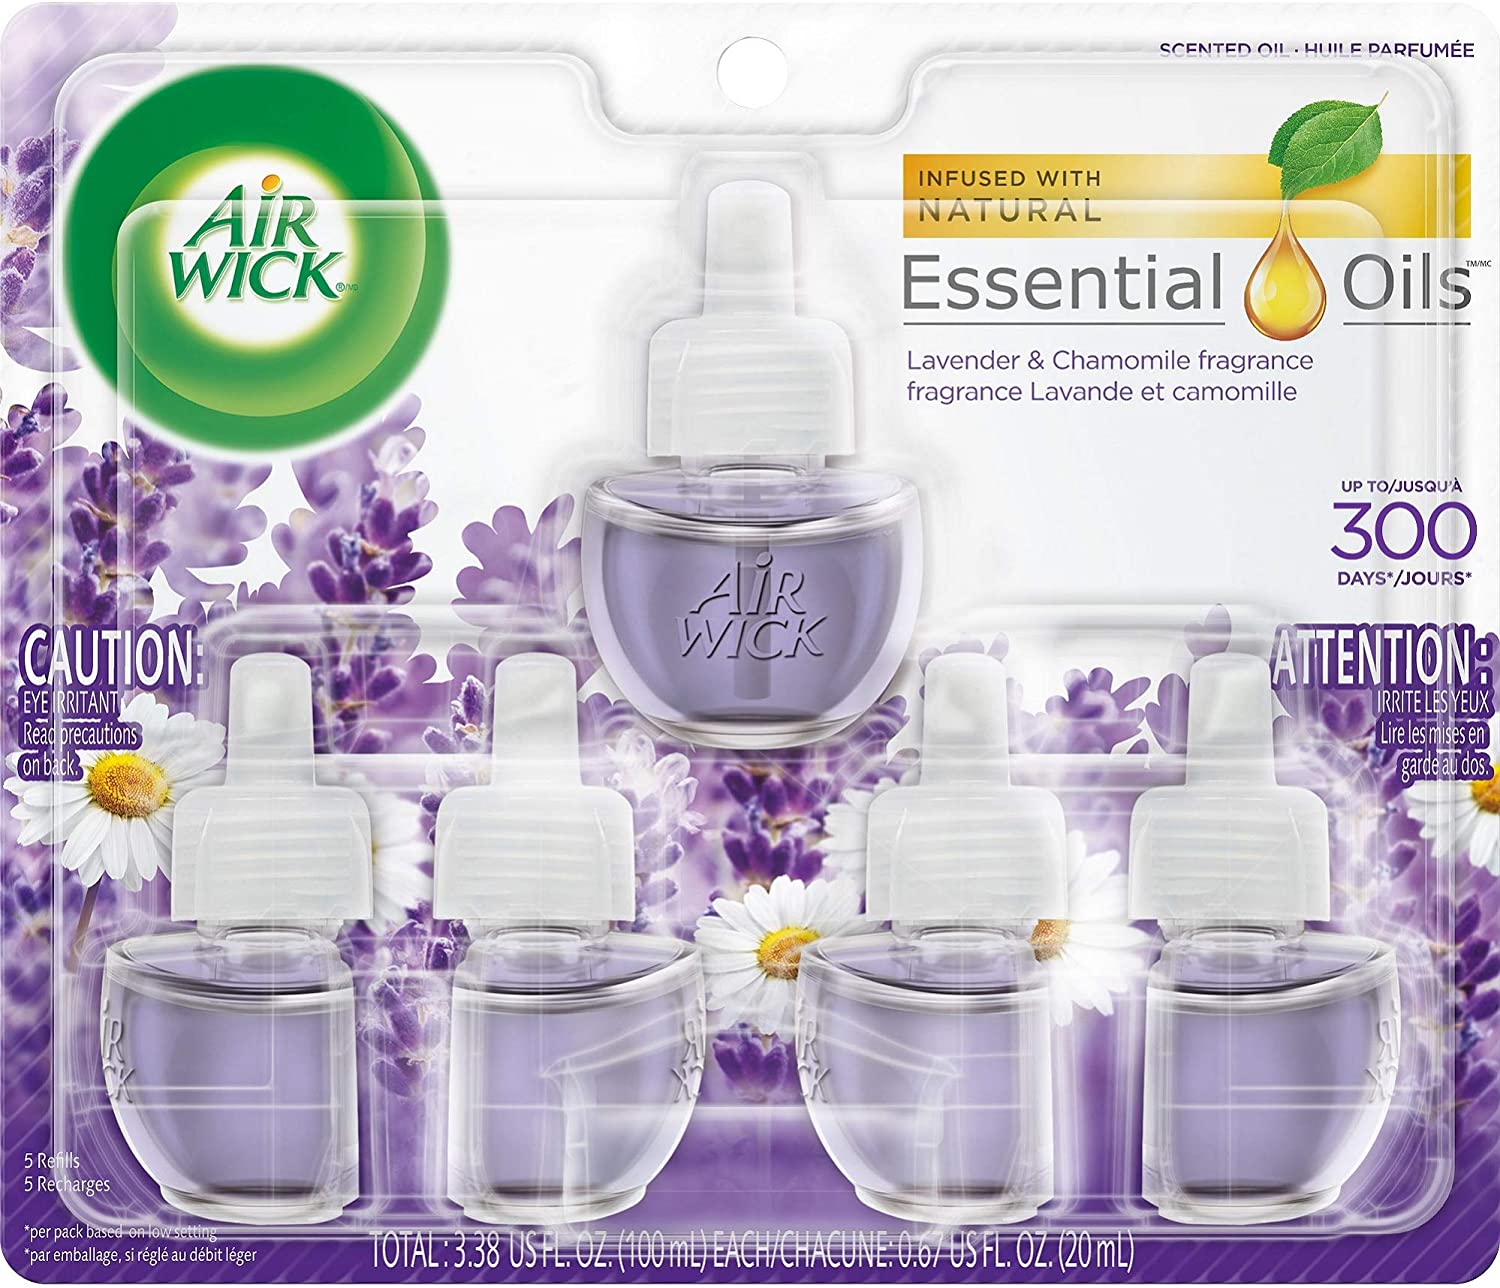 Bộ 5 chai tinh dầu thơm phòng Air Wick Scented Oil Air Freshener Lavender